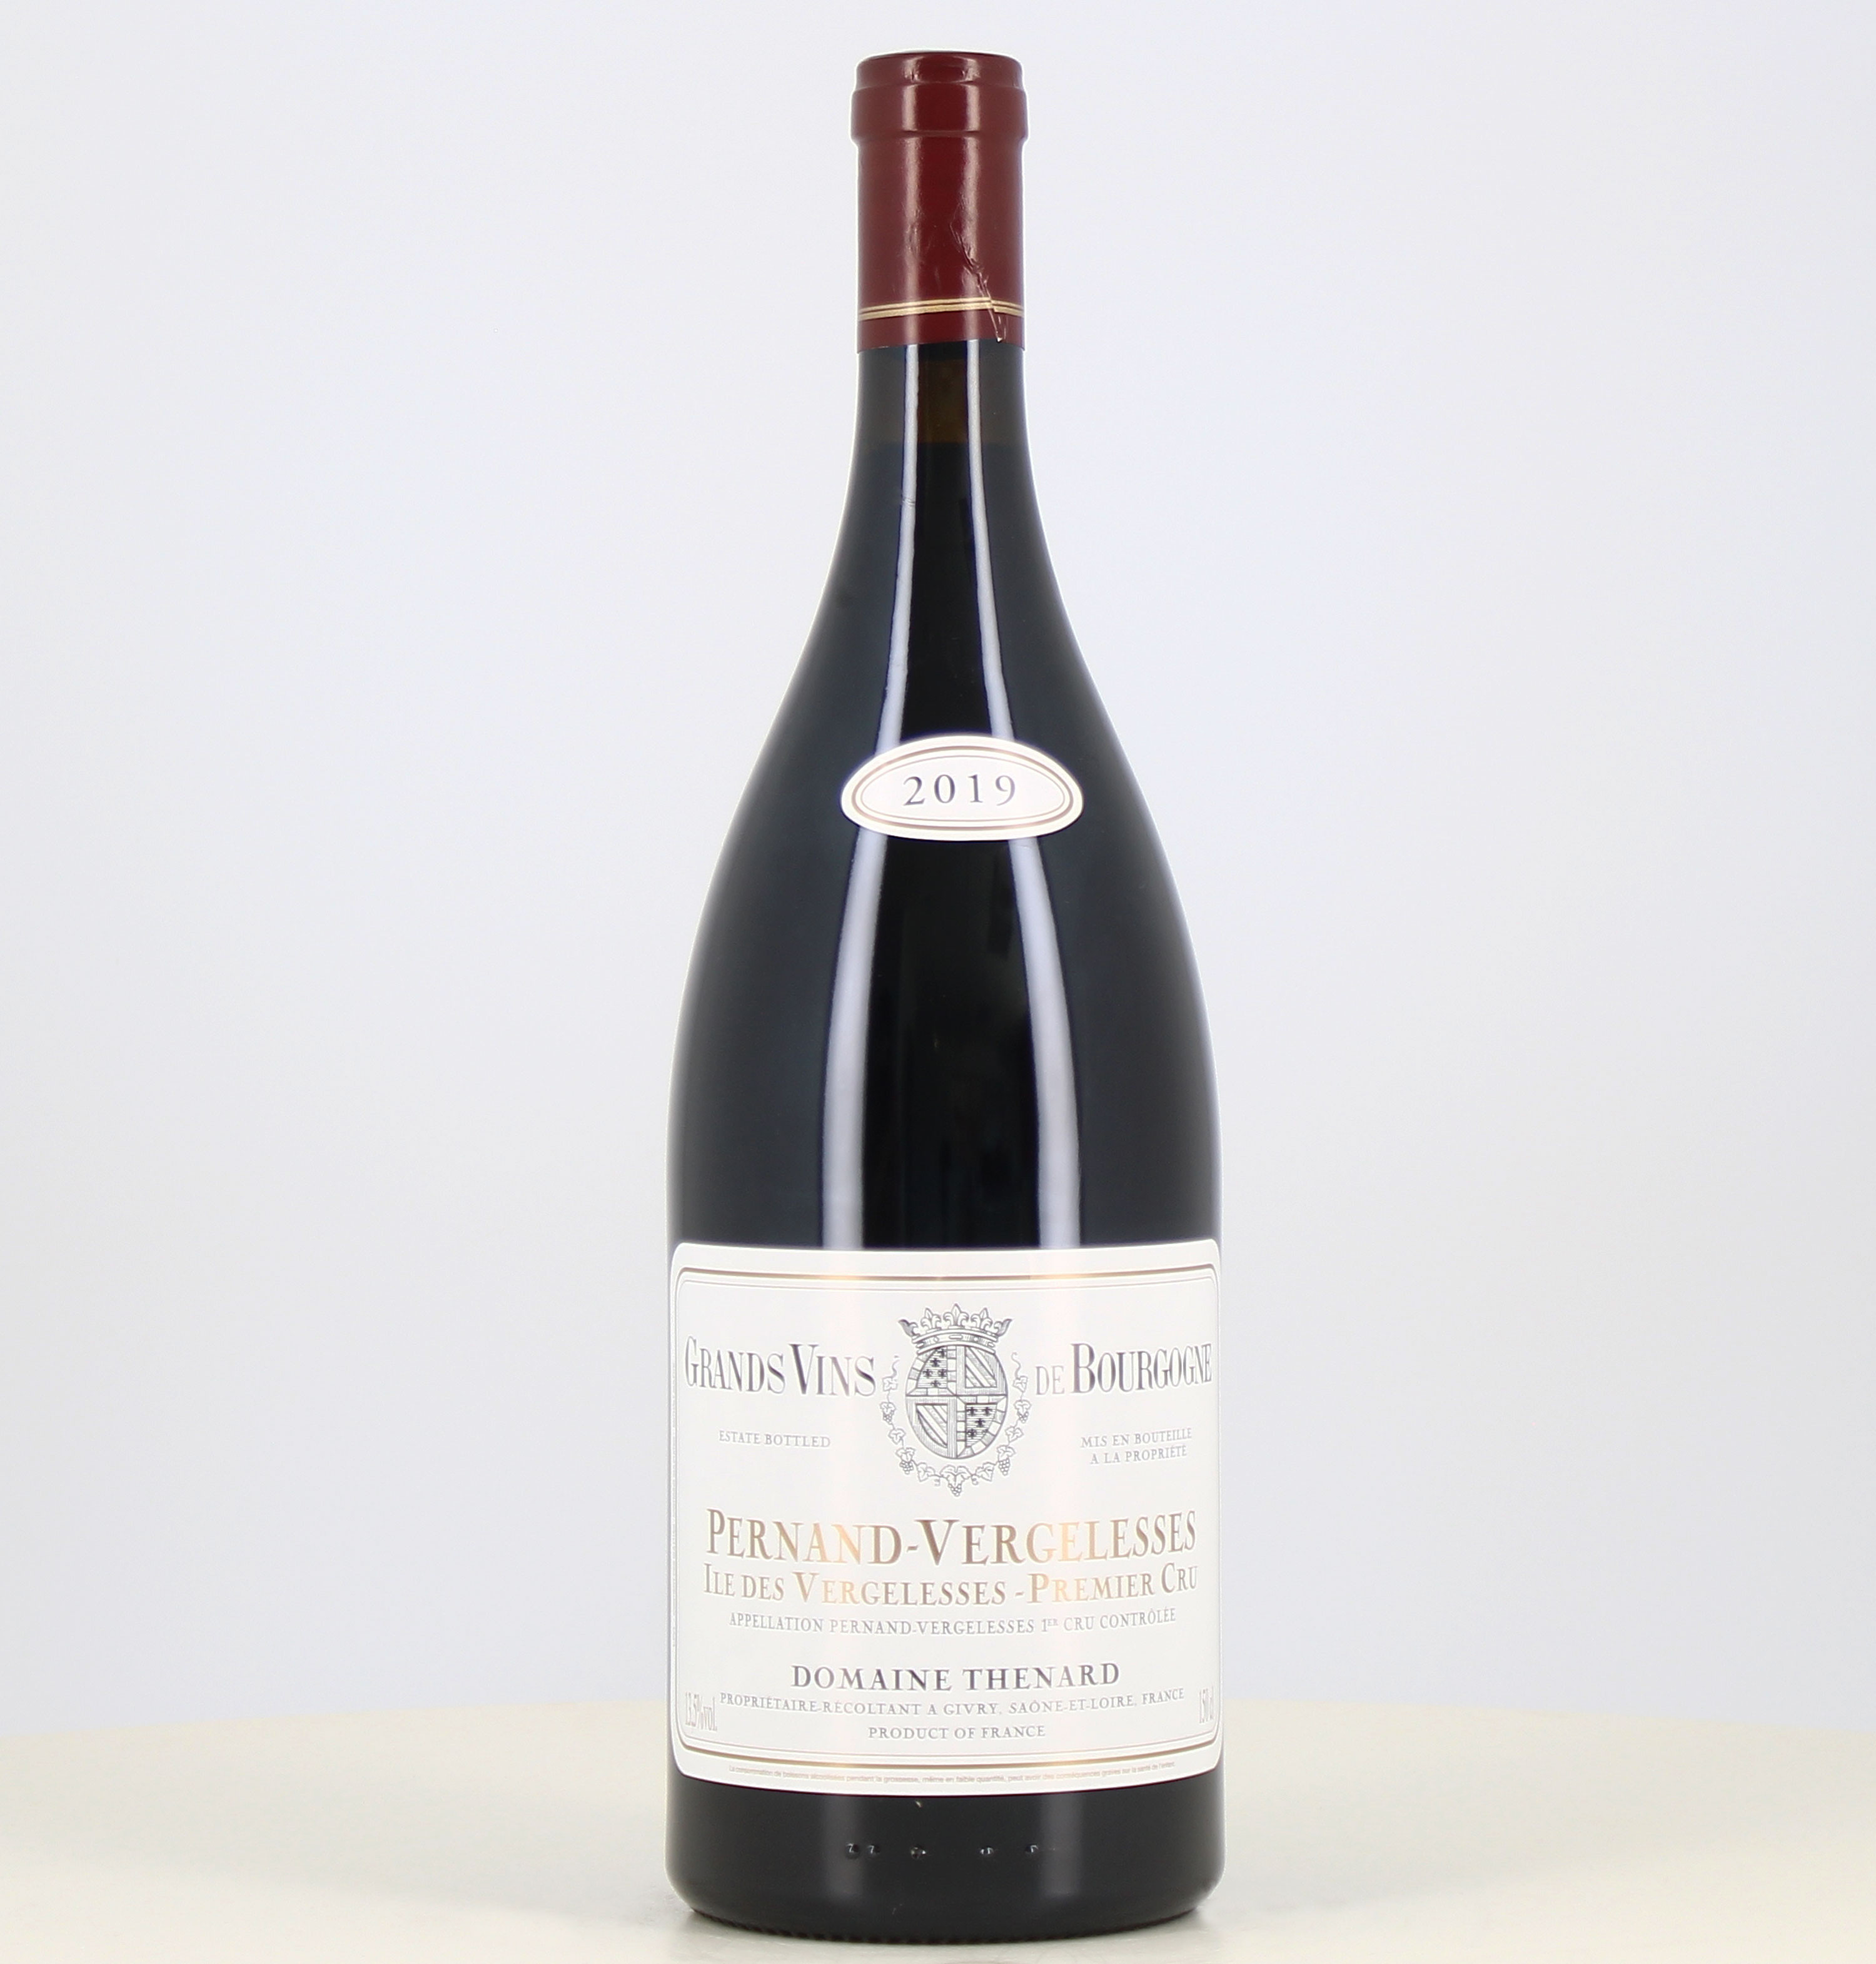 Magnum of white wine Pernand-Vergelesse 1er cru Île des Vergelesse domaine Thenard 2019 